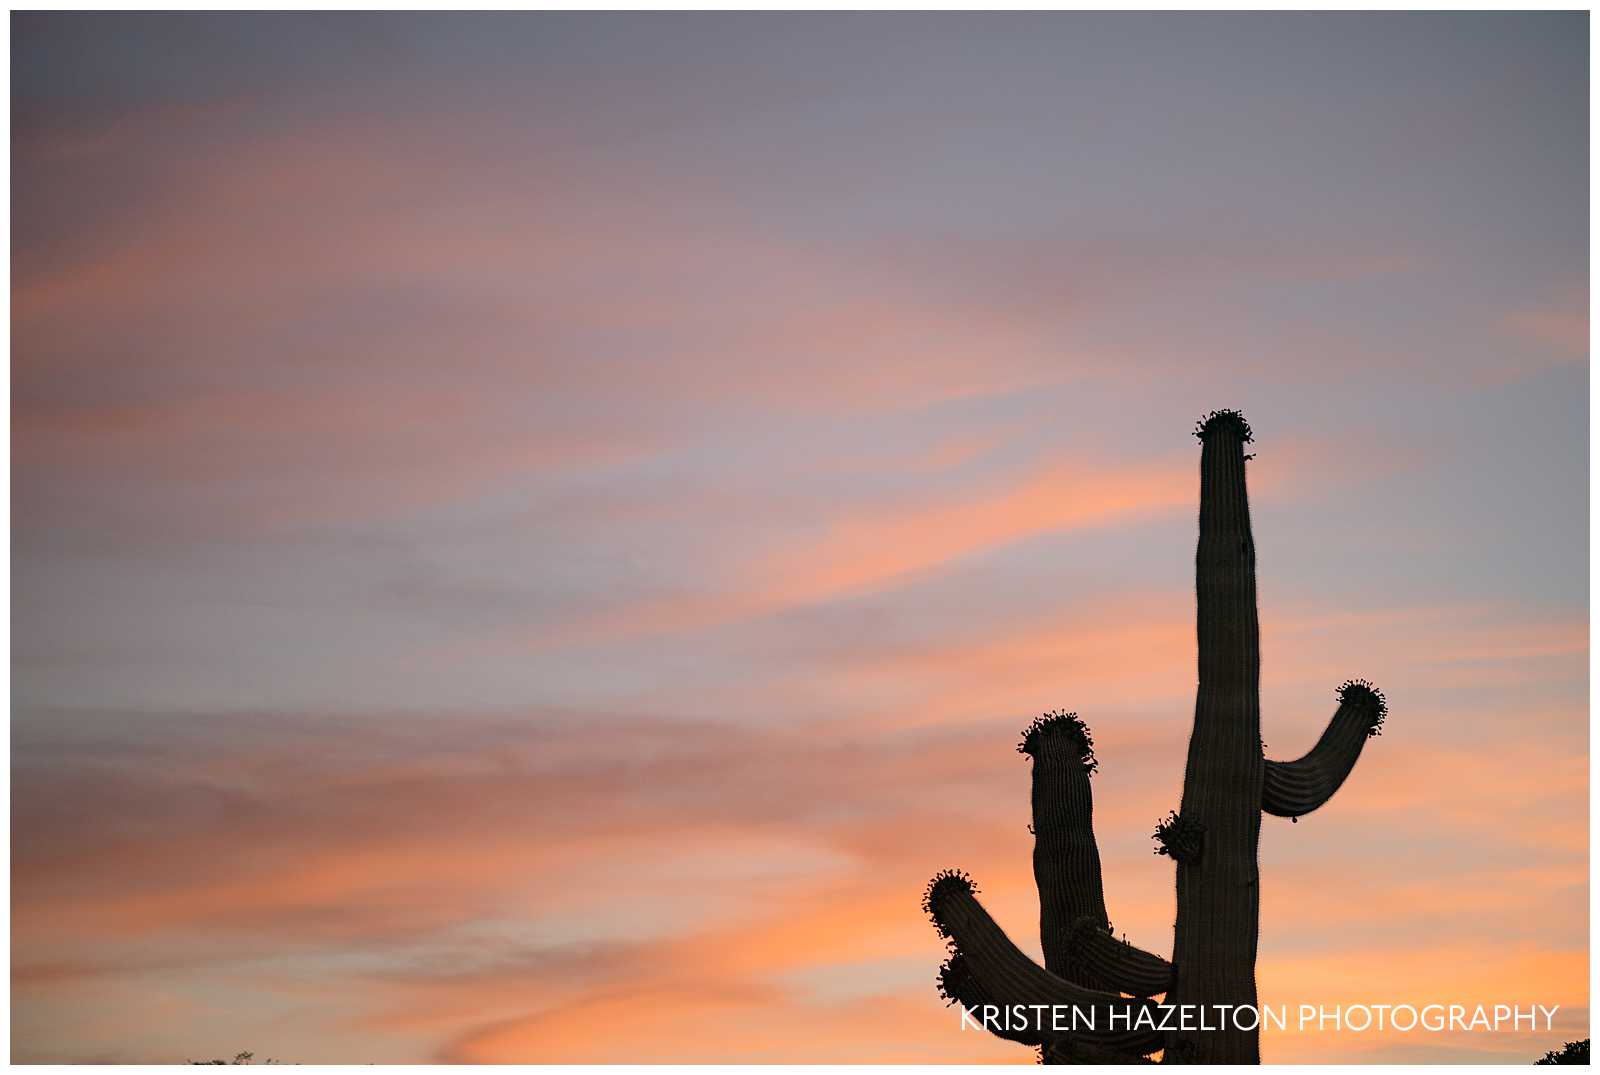 Tucson, AZ sunset with saguaro silhouette